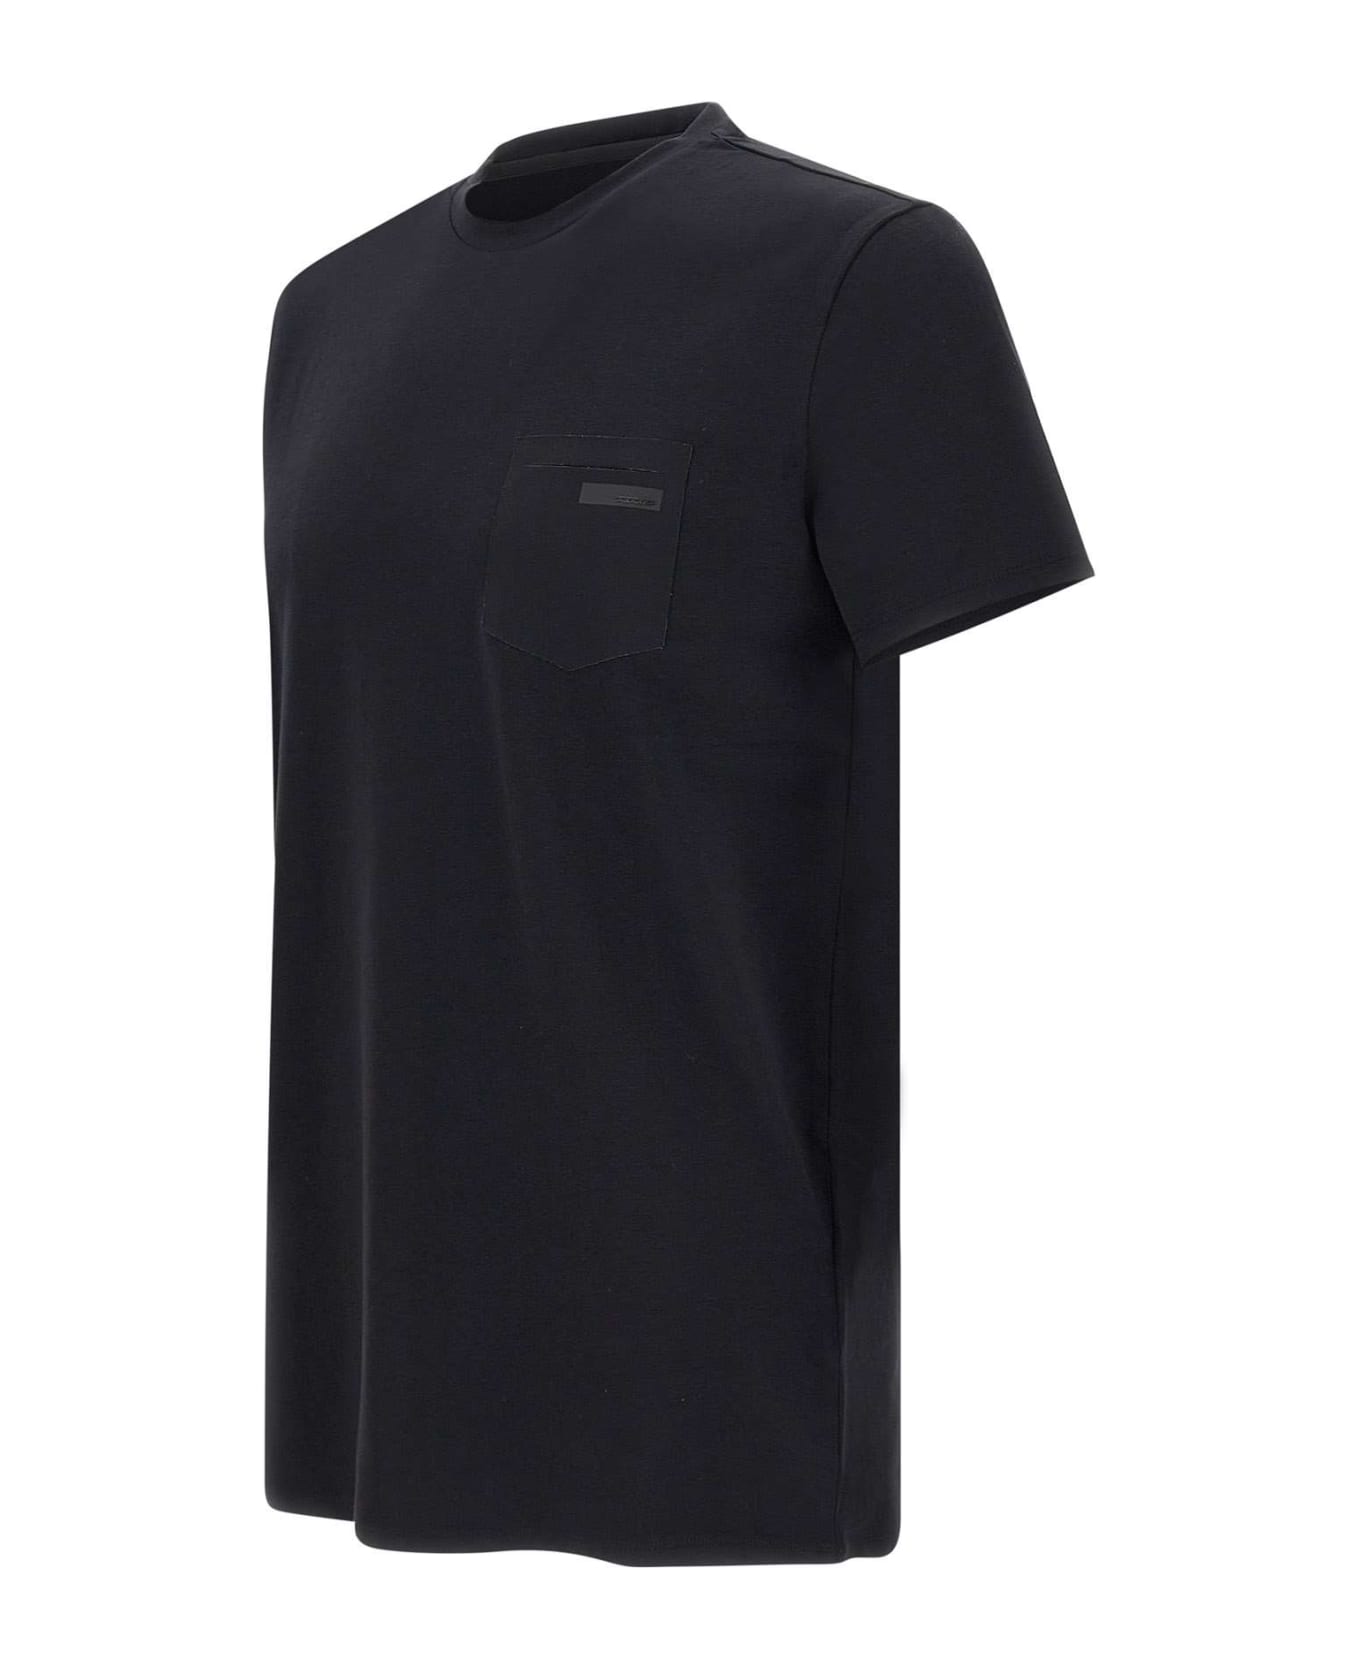 RRD - Roberto Ricci Design "revo Shirty" T-shirt - BLACK